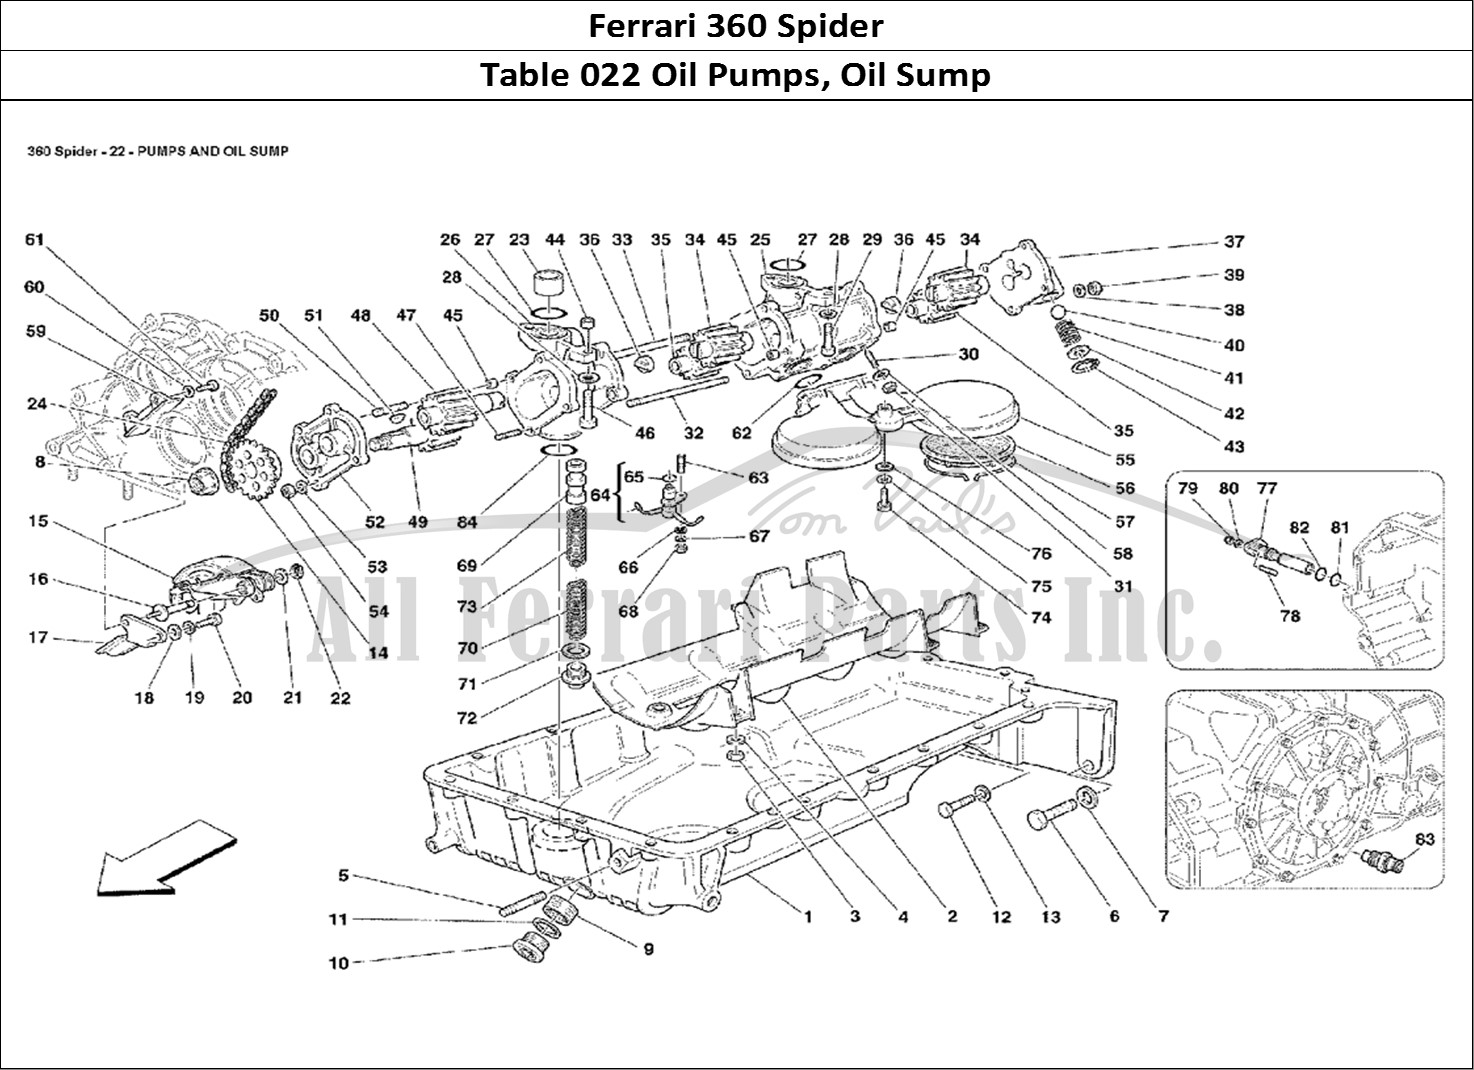 Ferrari Parts Ferrari 360 Spider Page 022 Pumps and Oil Sump